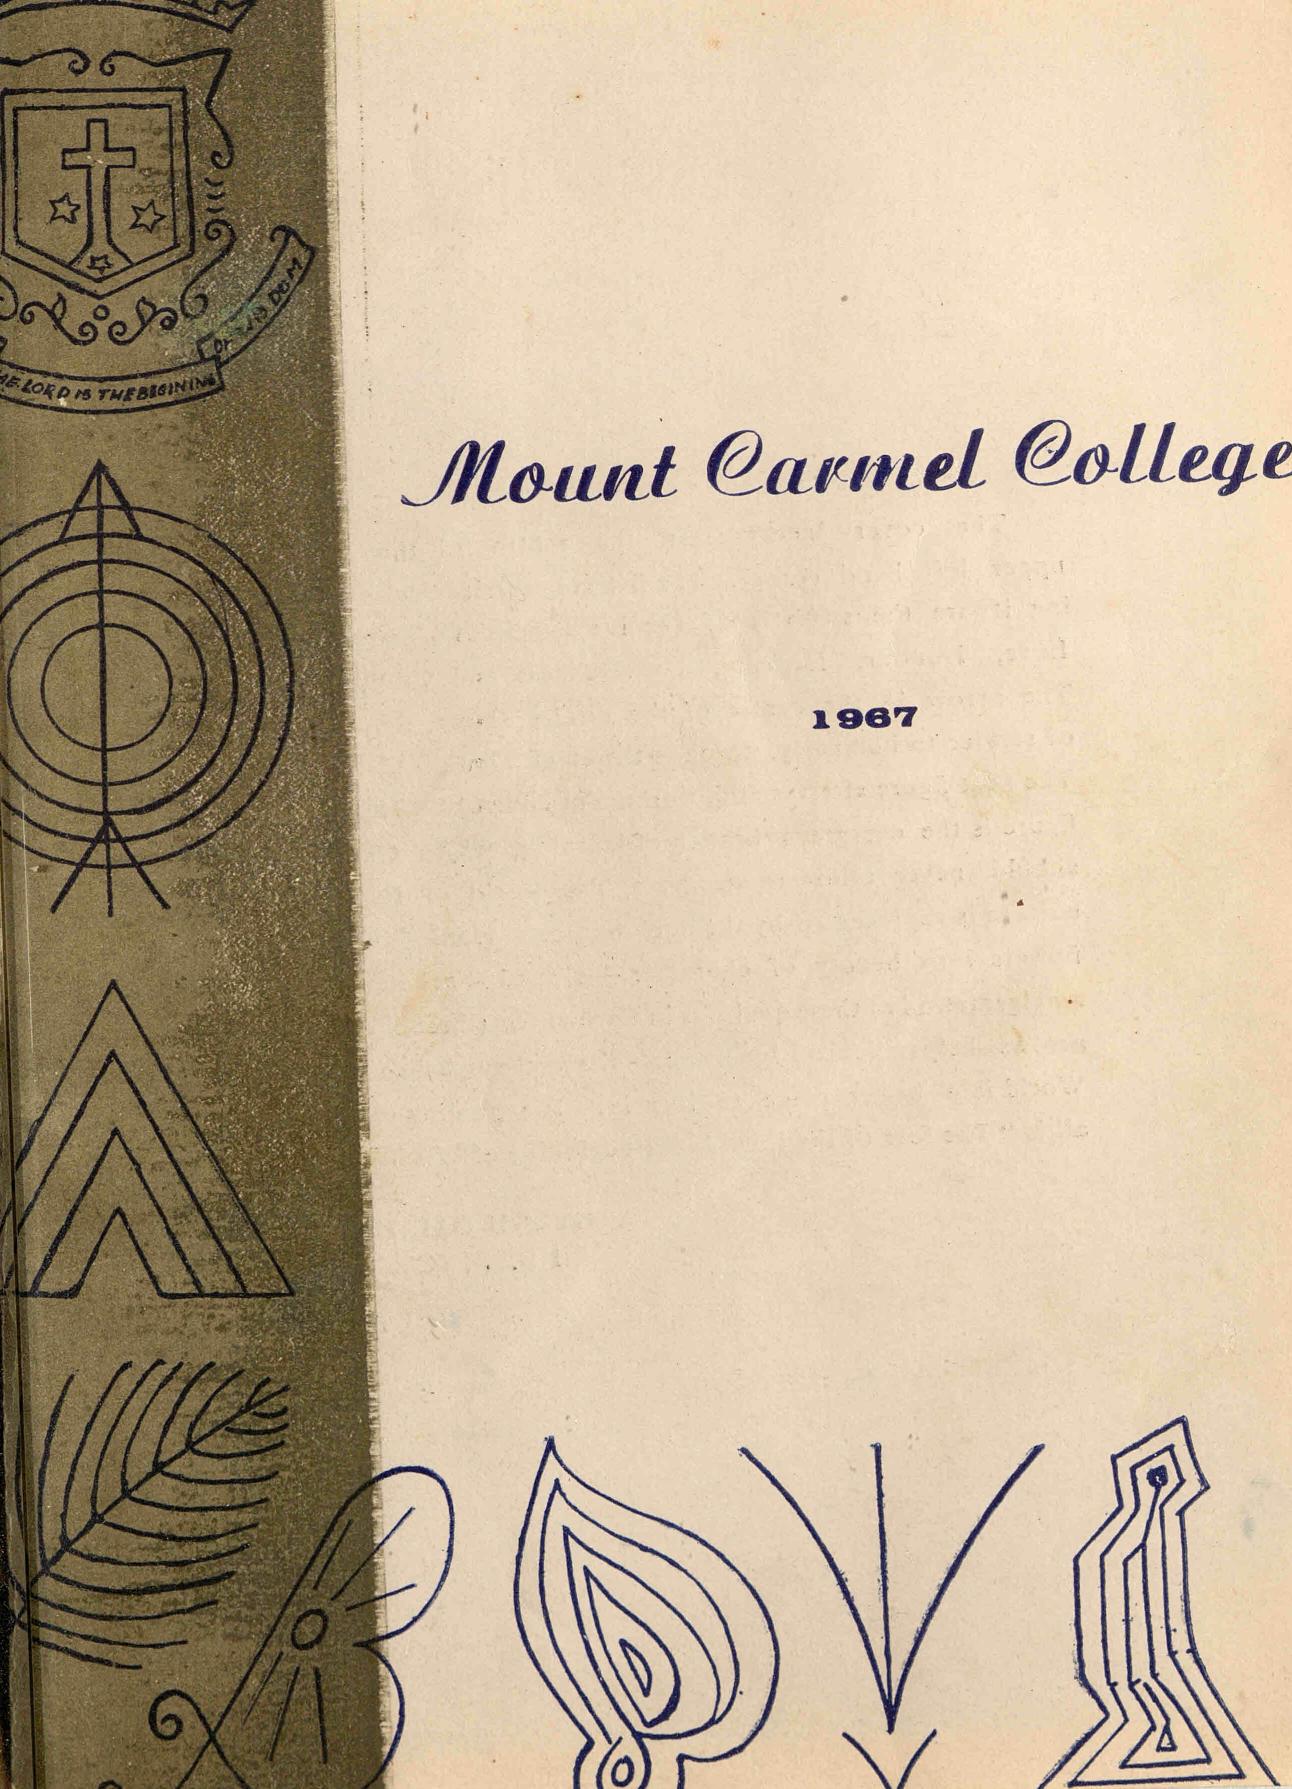  1967 - Mount Carmel College Bangalore Annual